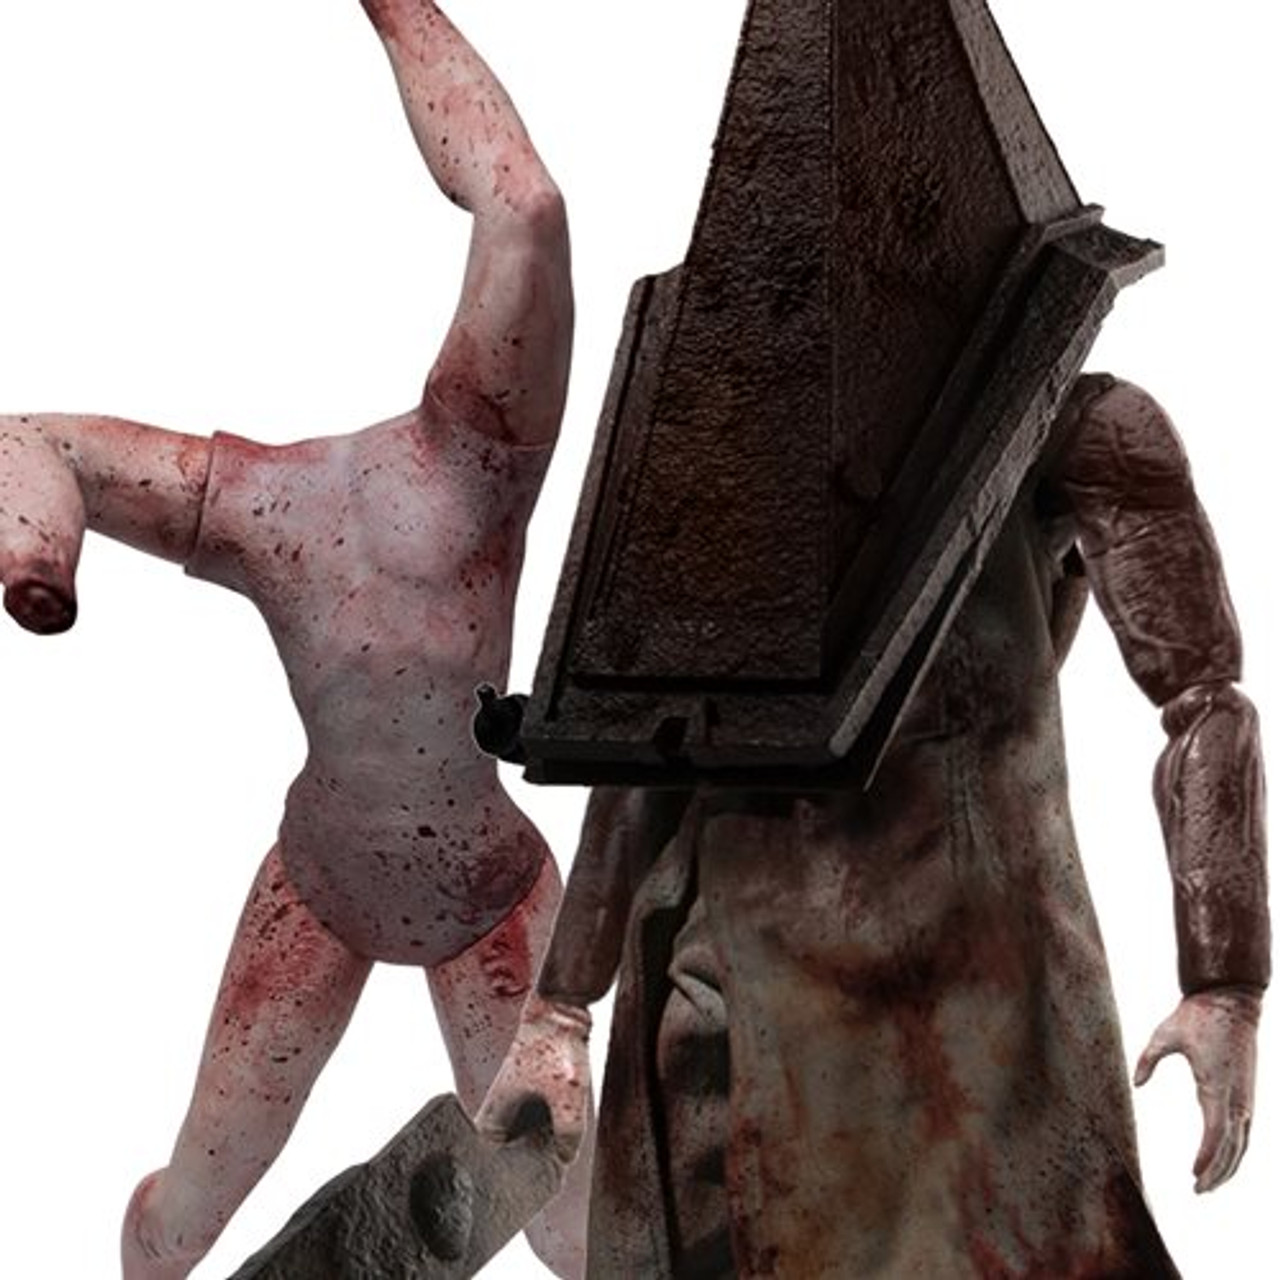 Pyramid Head Figure Silent Hill Horror Statue Silent Hill